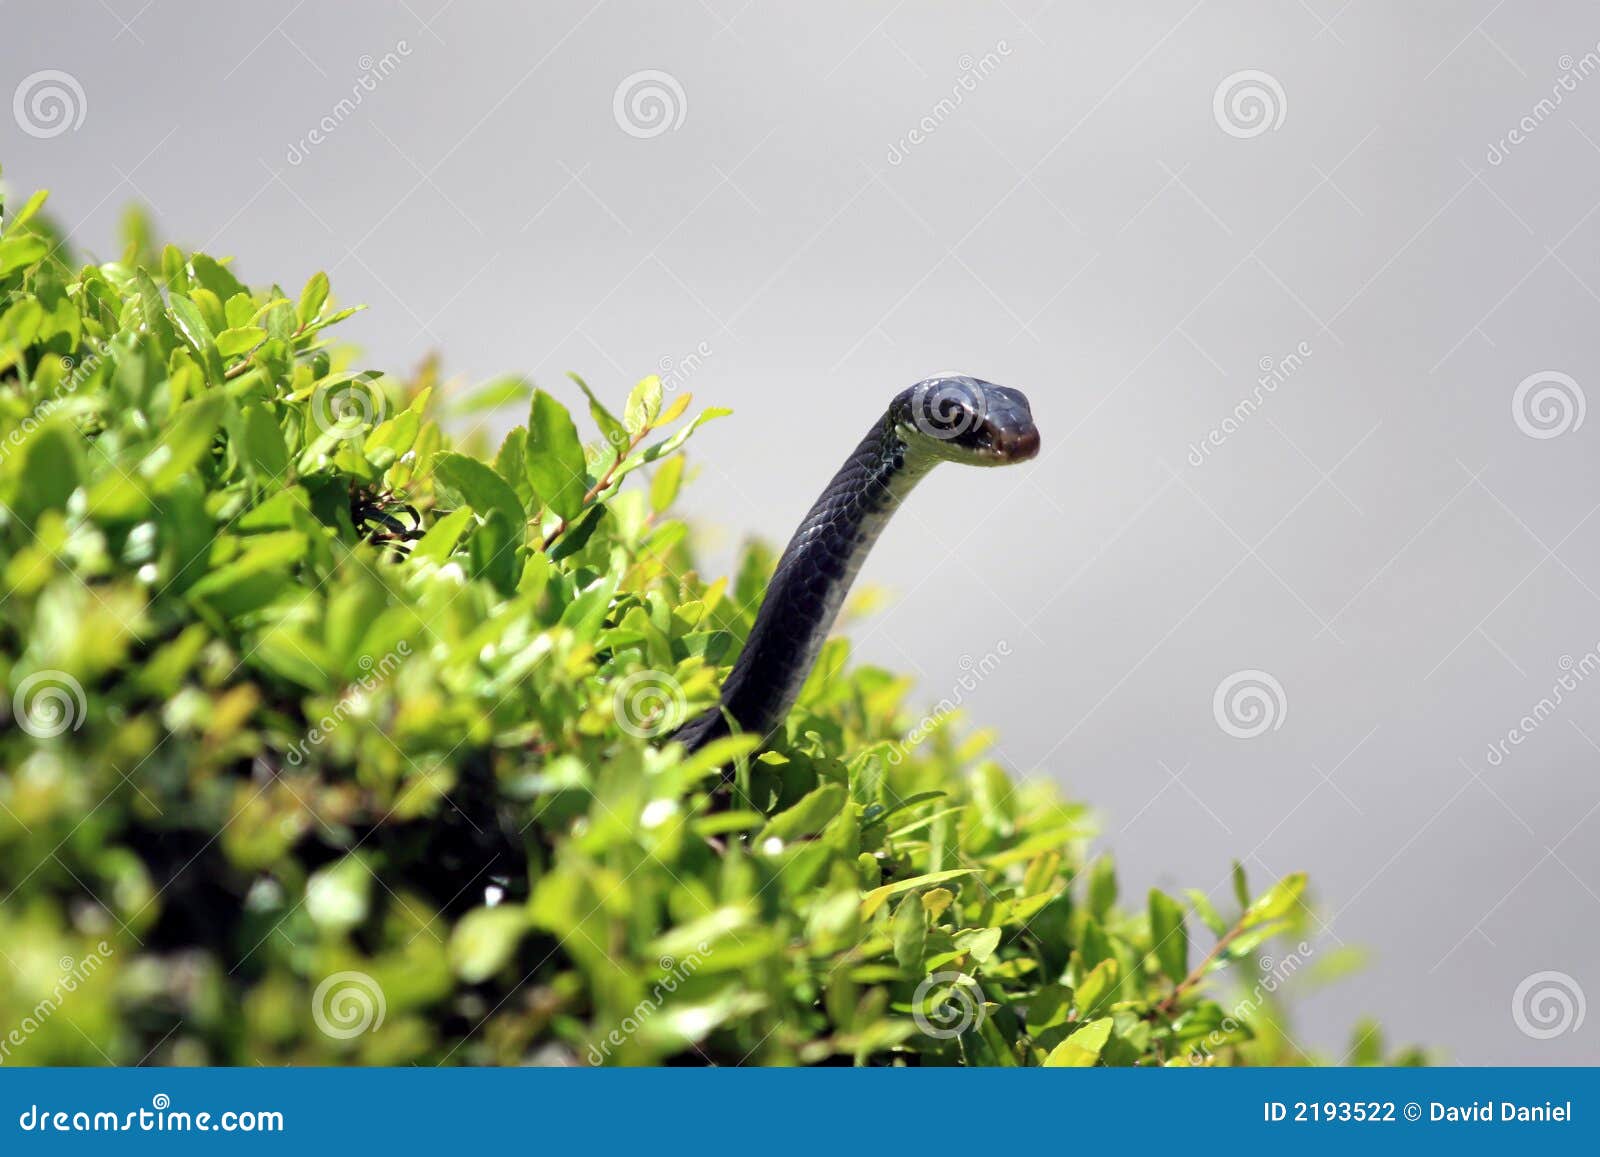 snake in a bush